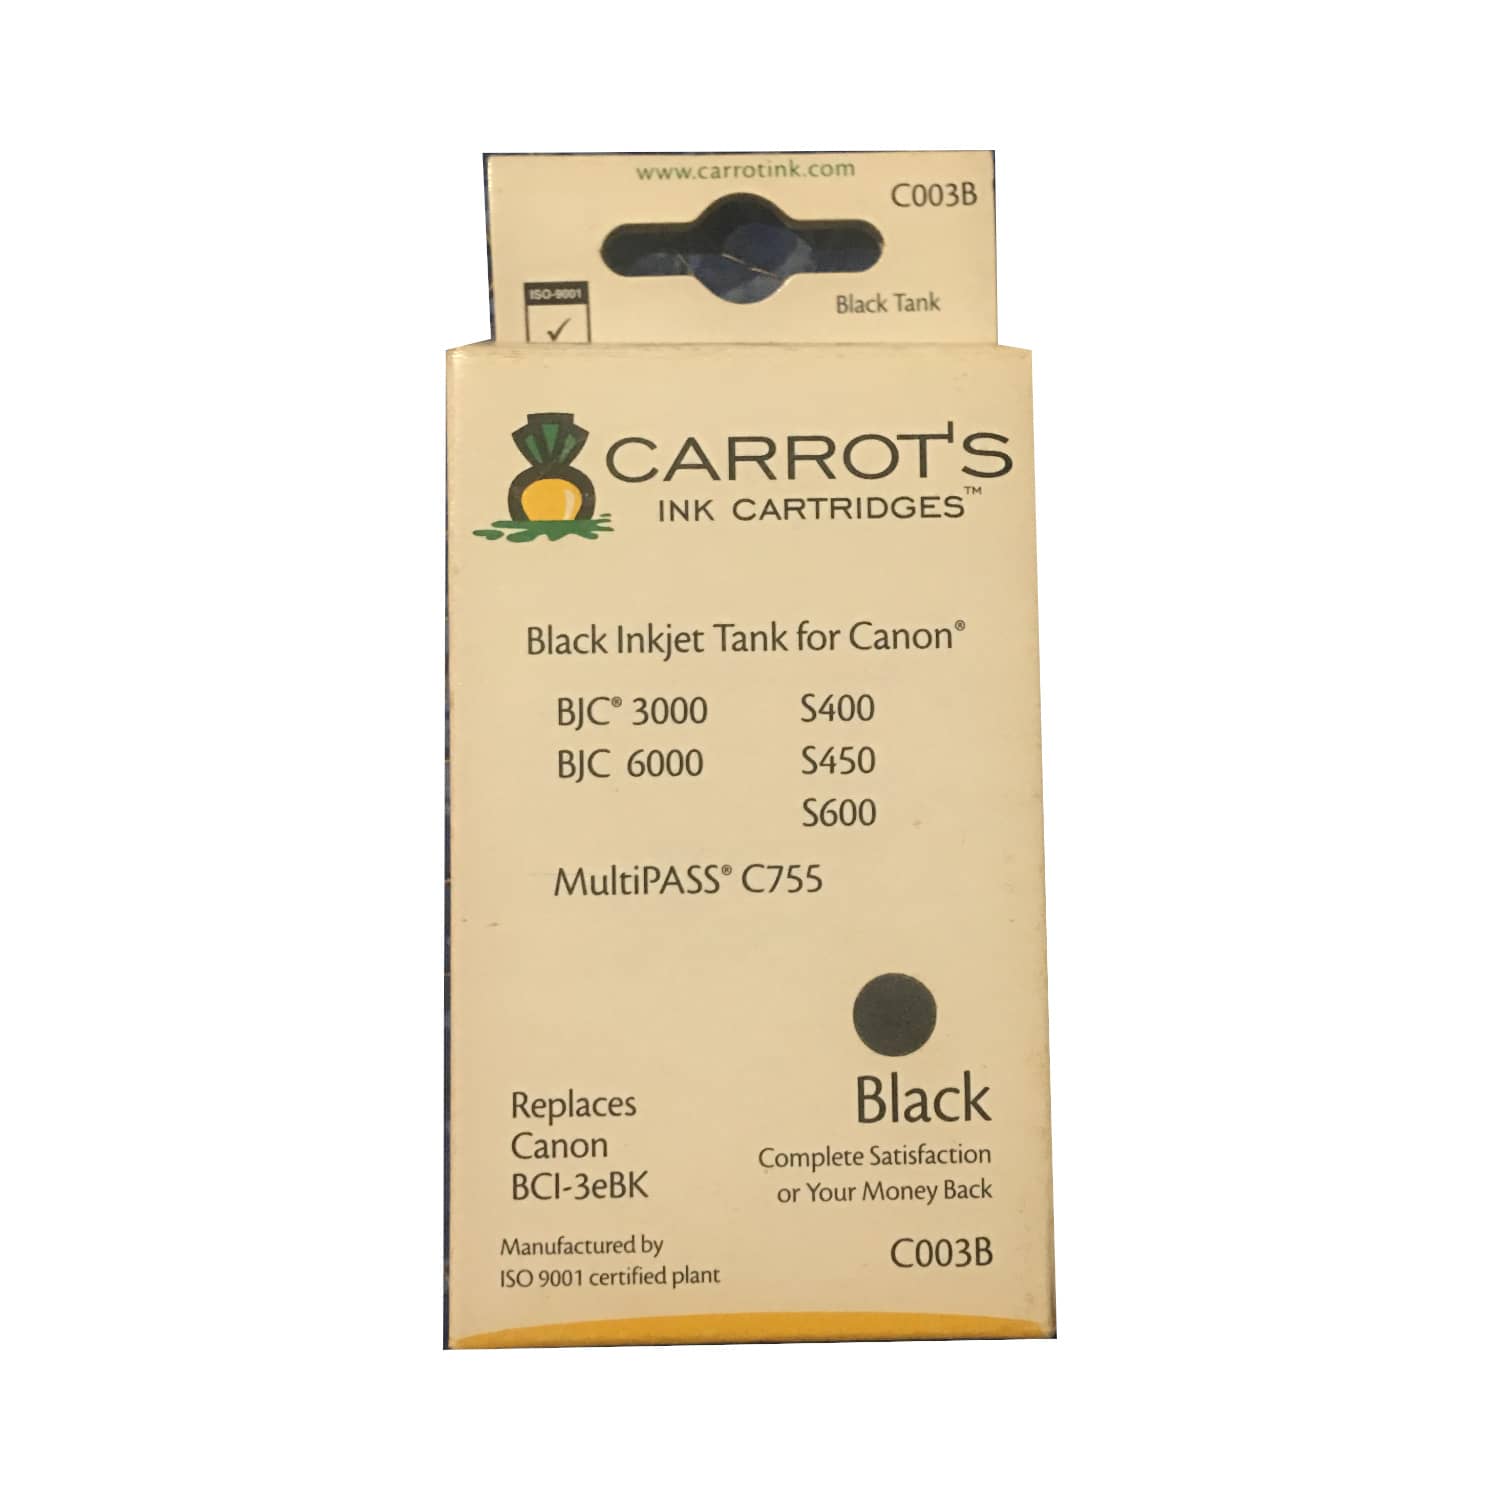 Carrot’s Ink Cartridge Black C003B